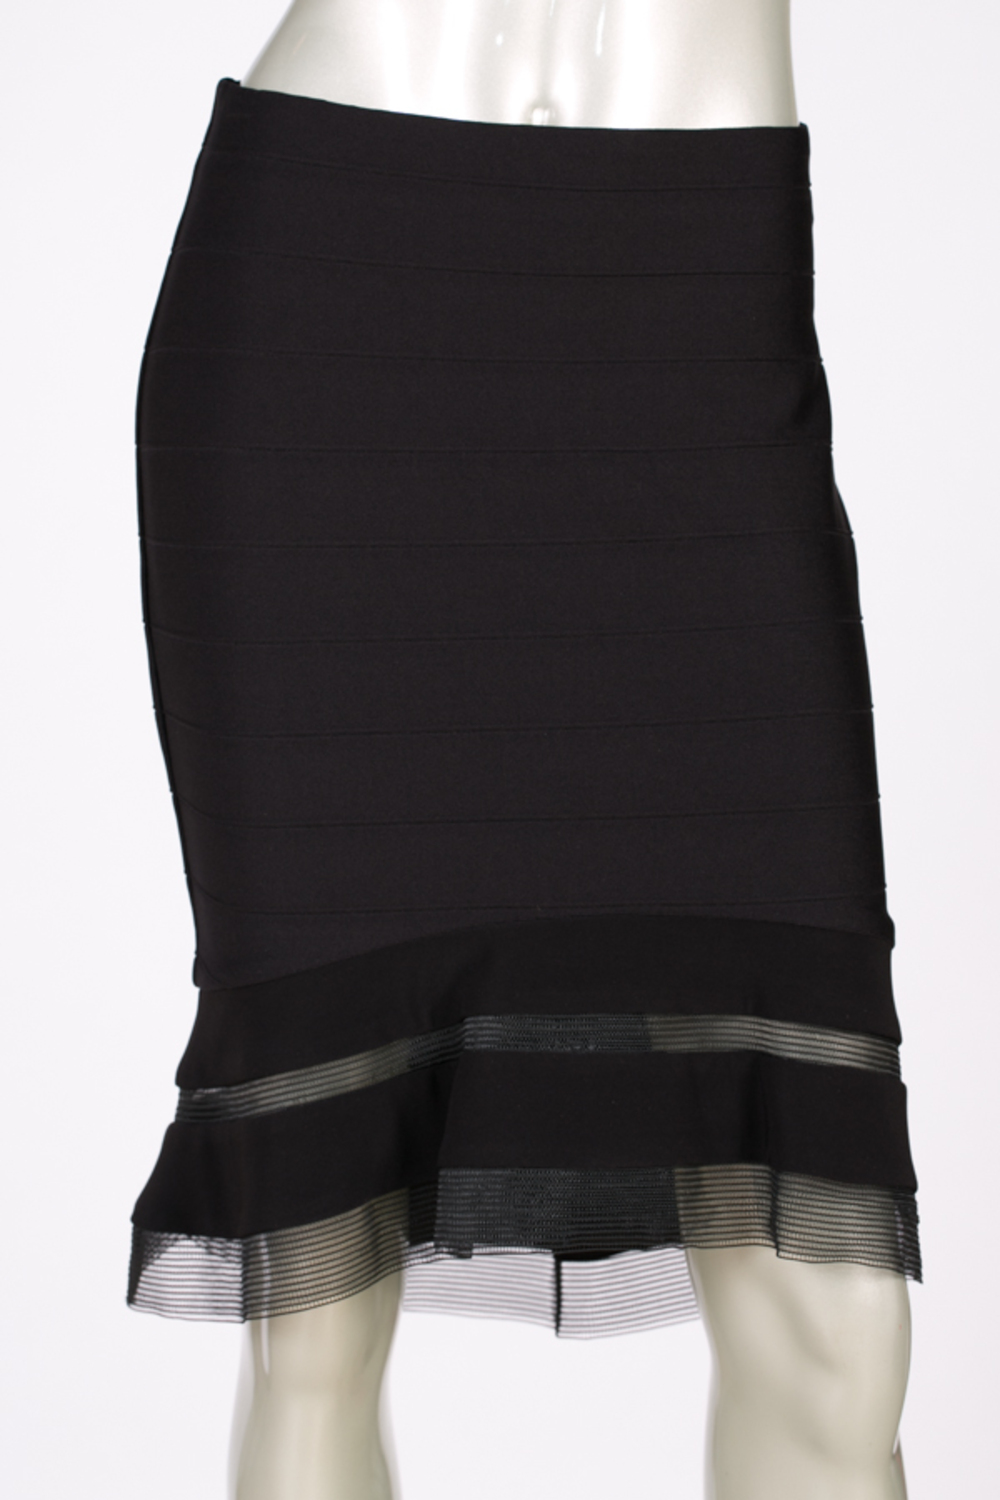 Joseph Ribkoff skirt style 41318. Black